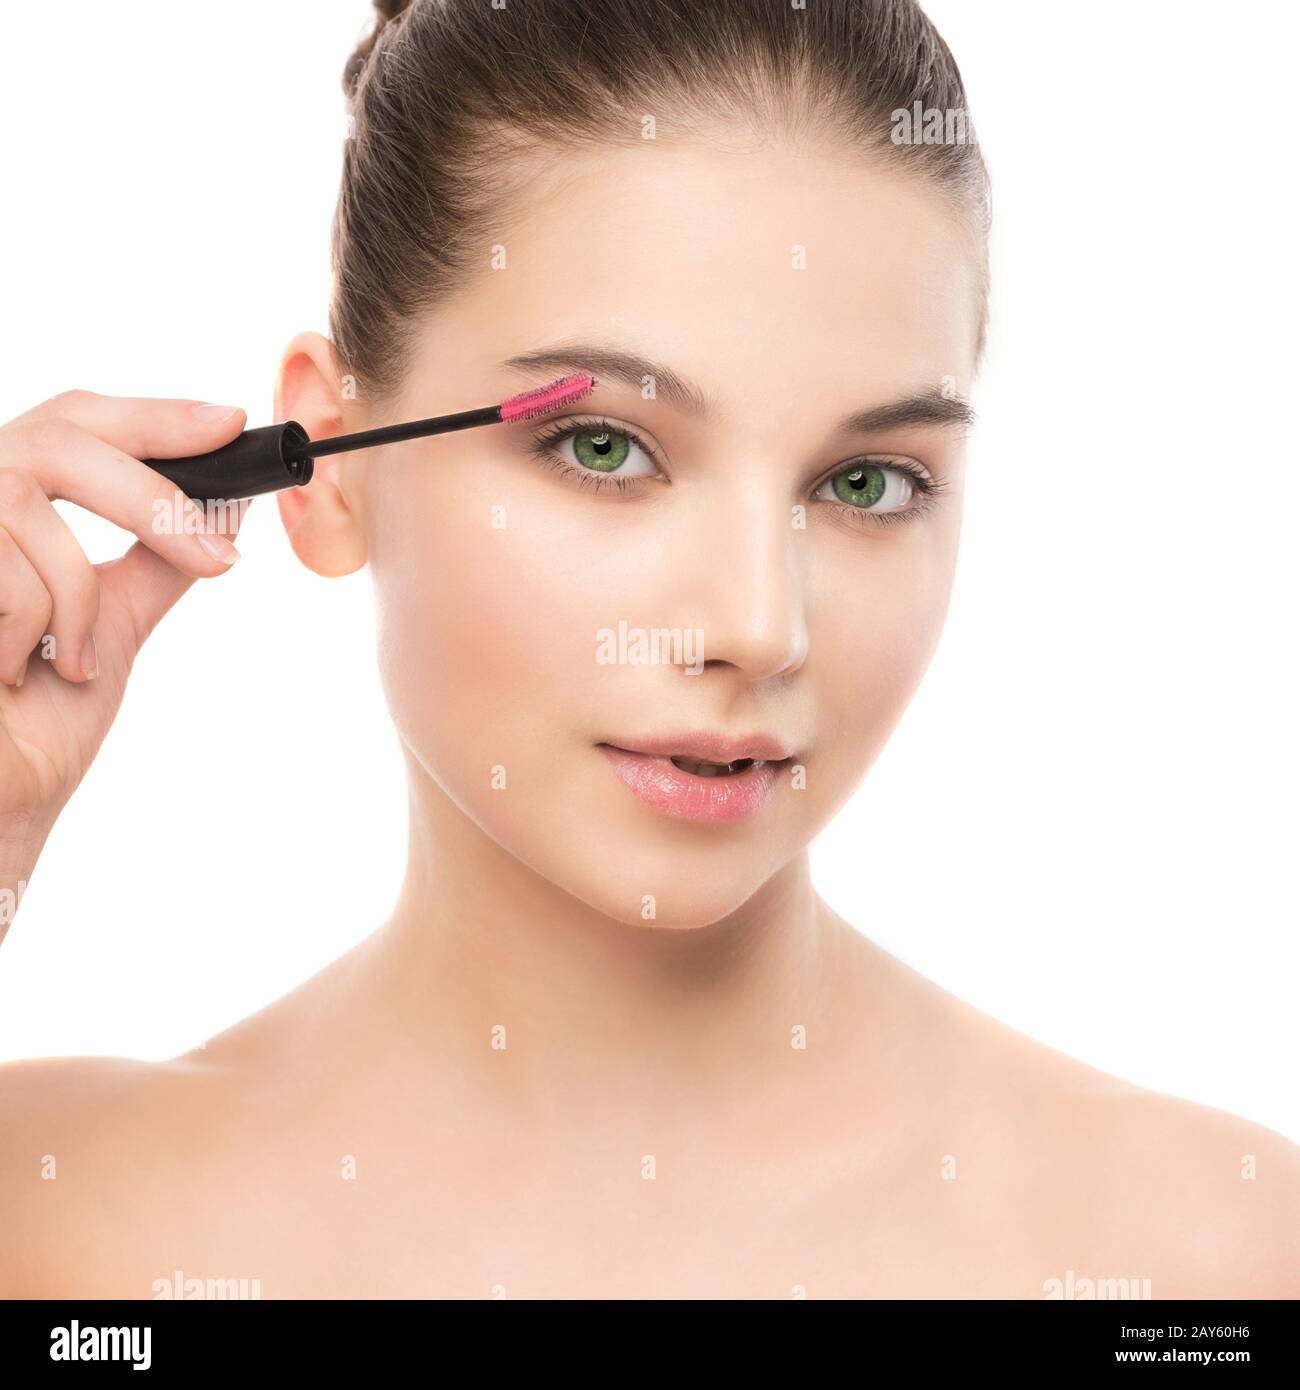 Eye make up apply. Mascara applying closeup, long lashes. makeup brush. Isolated. Stock Photo